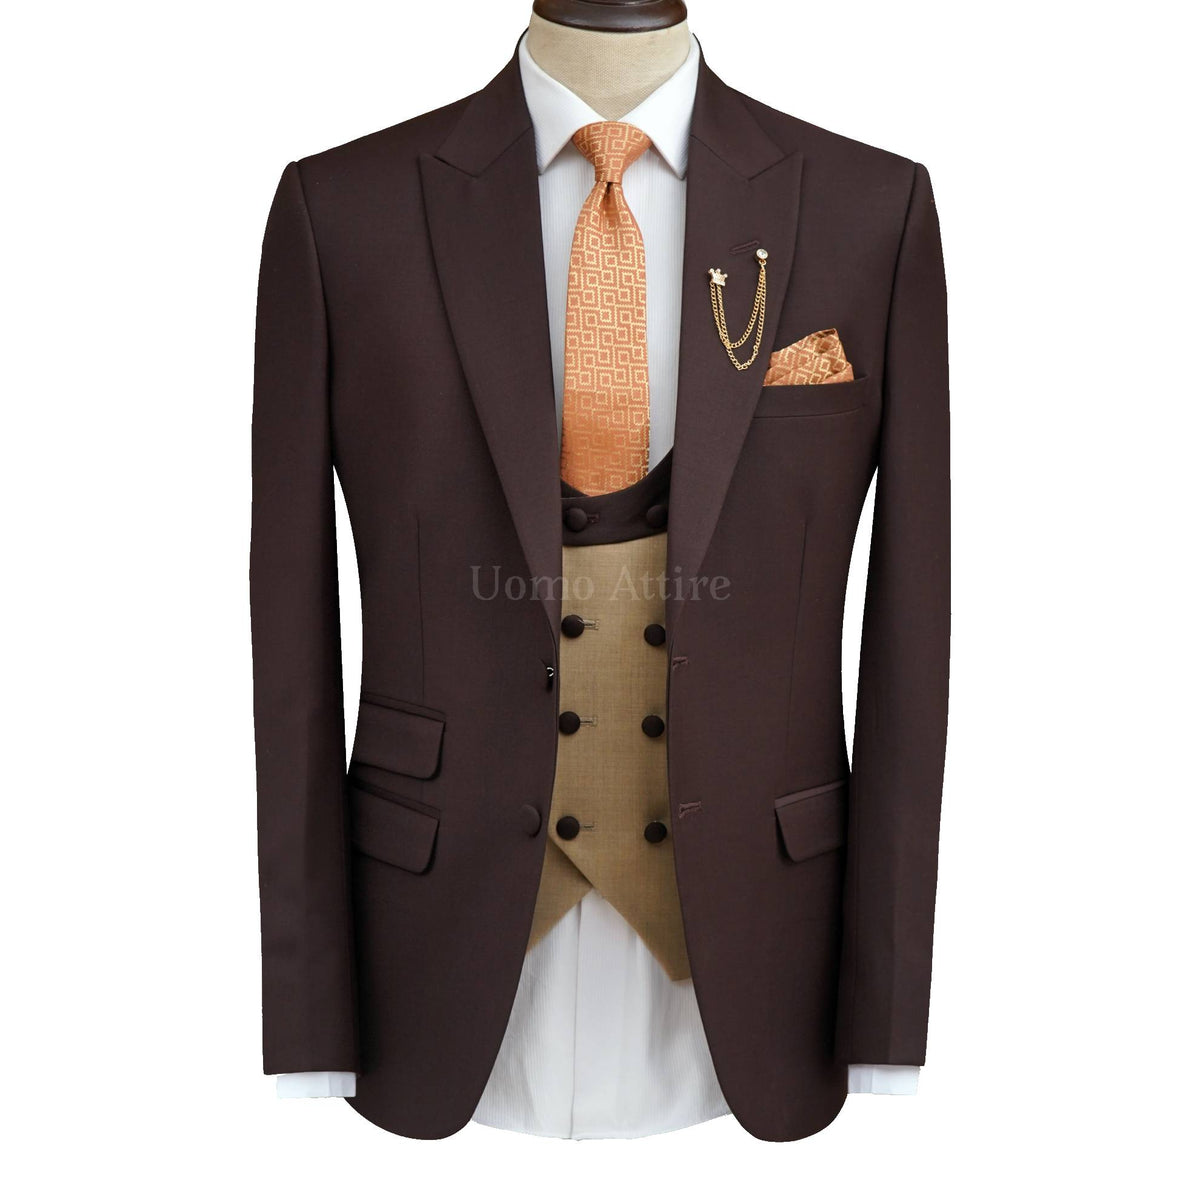 Burgundy 3 Piece Suit for Men with Tan Vest and Orange Tie – Uomo Attire